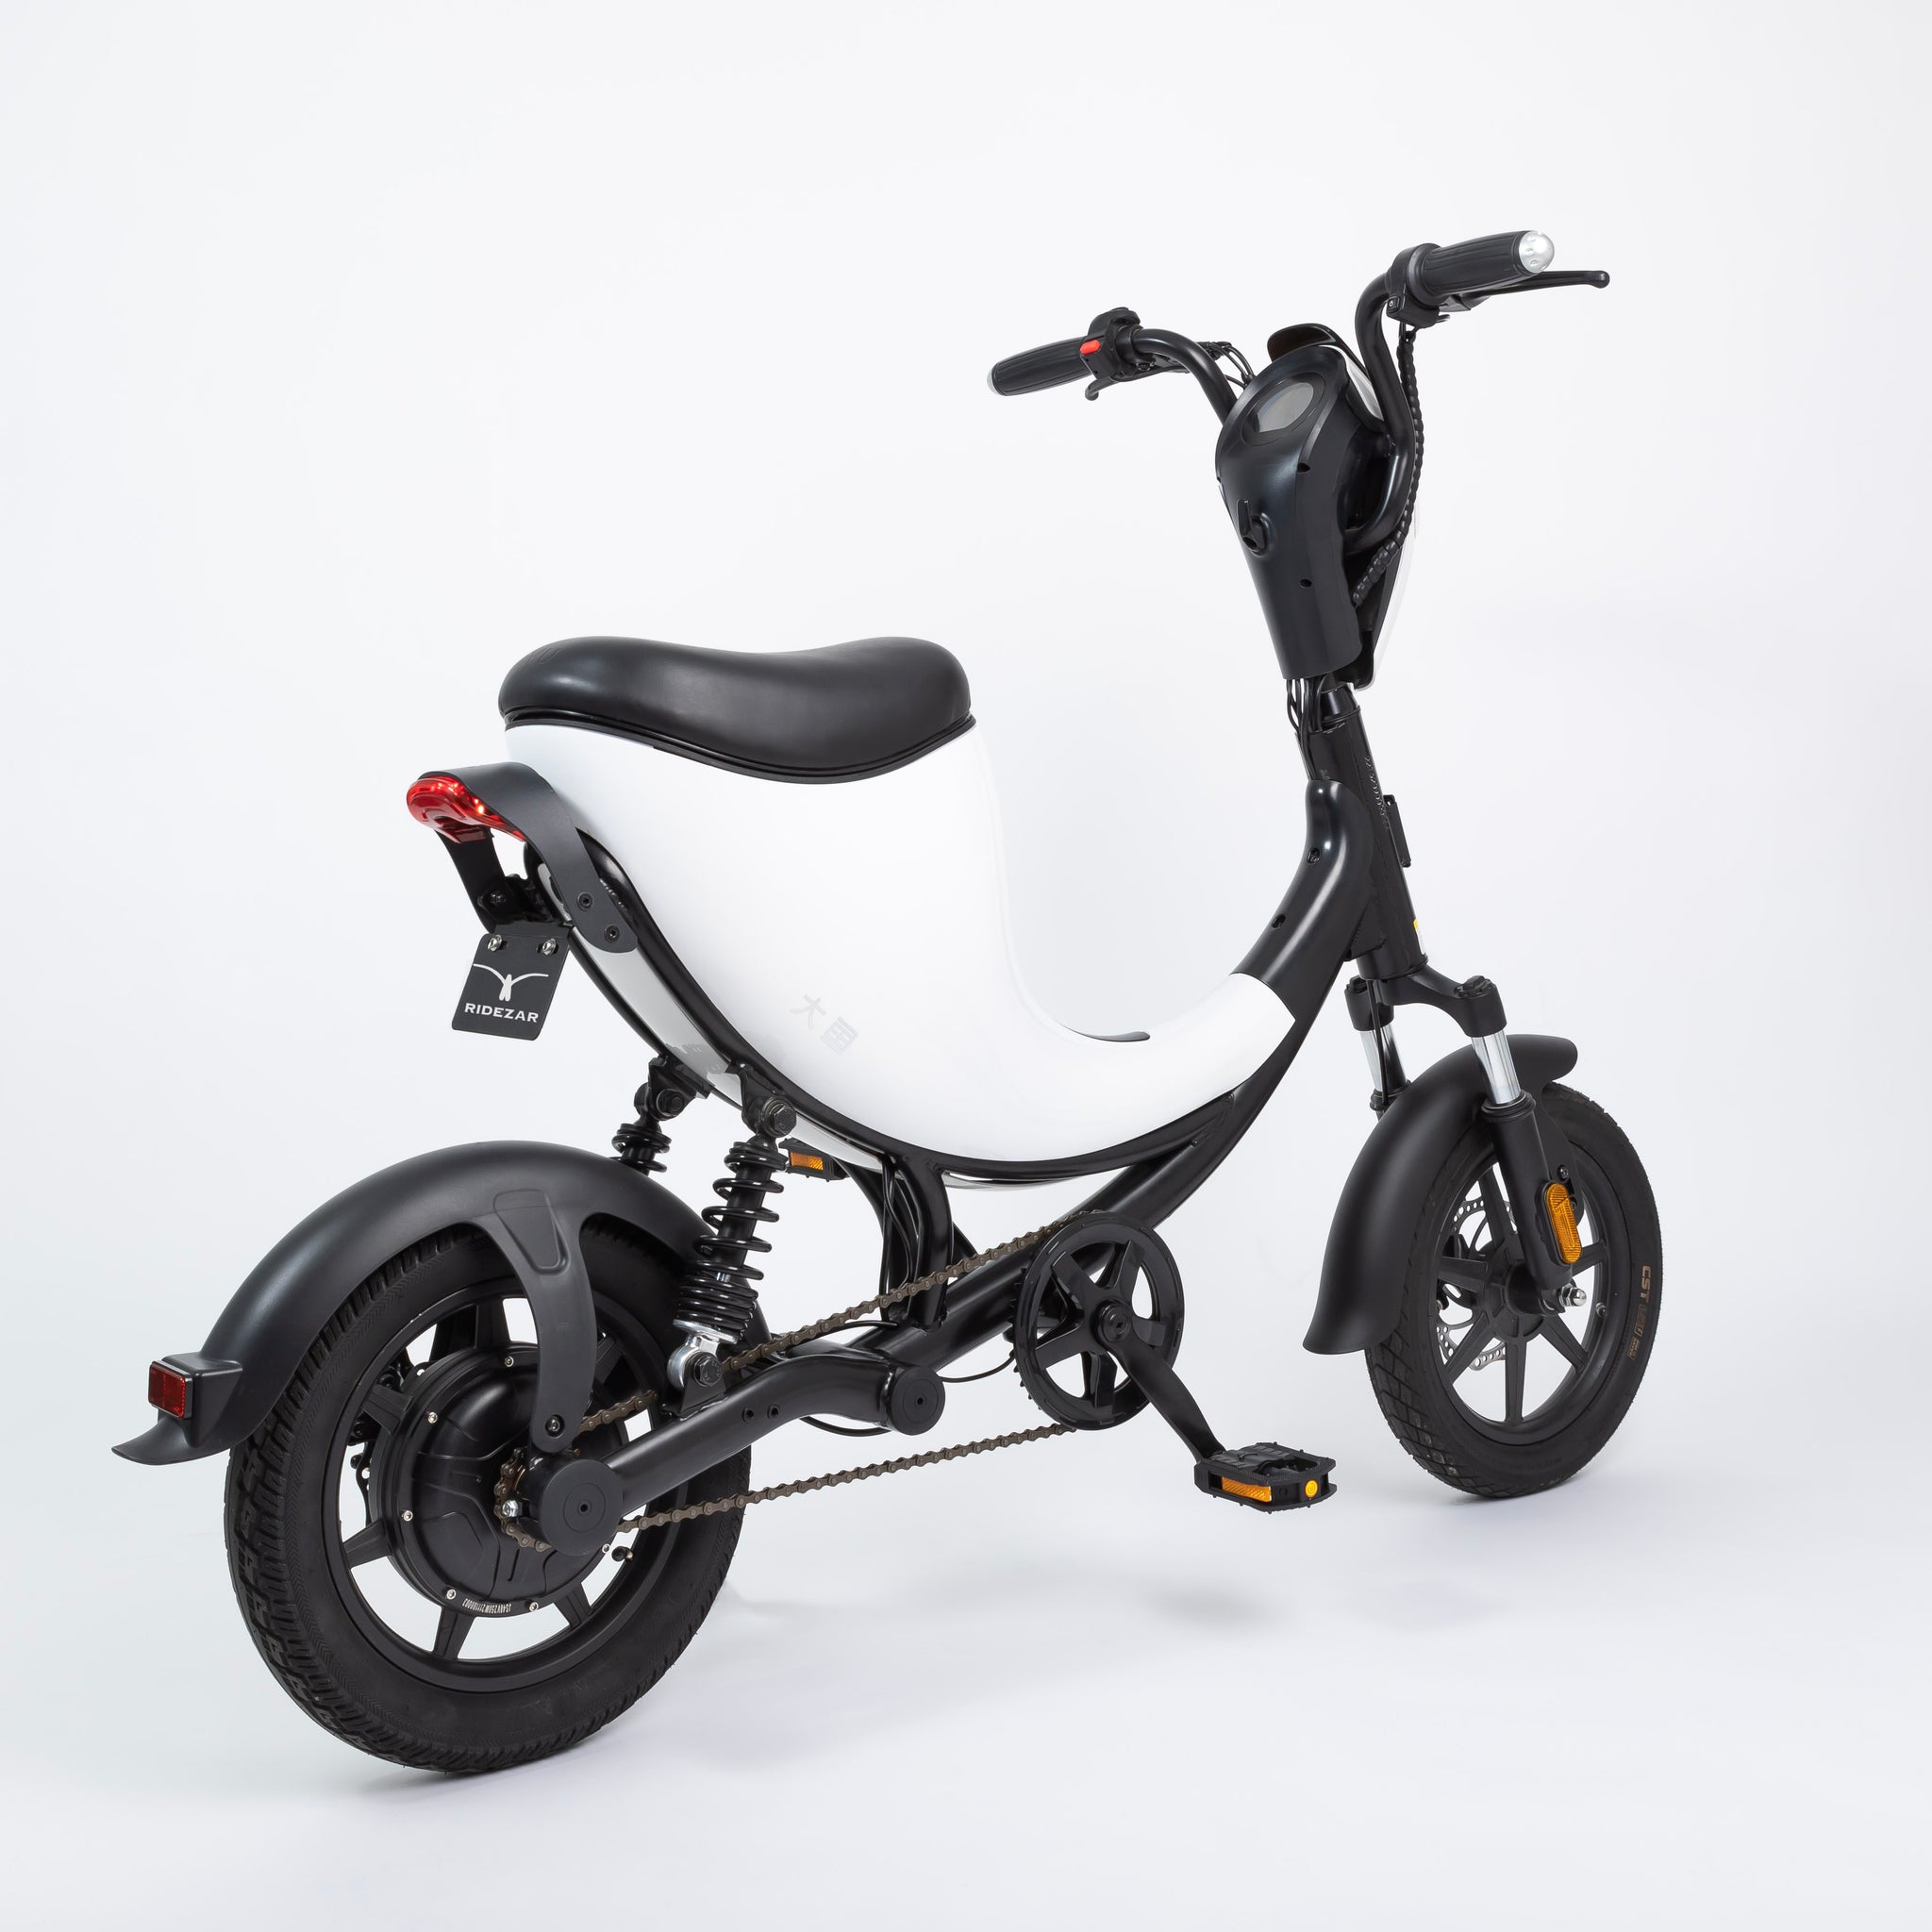 Ridezar Introduces the Smart DYU L1 Electric Bike